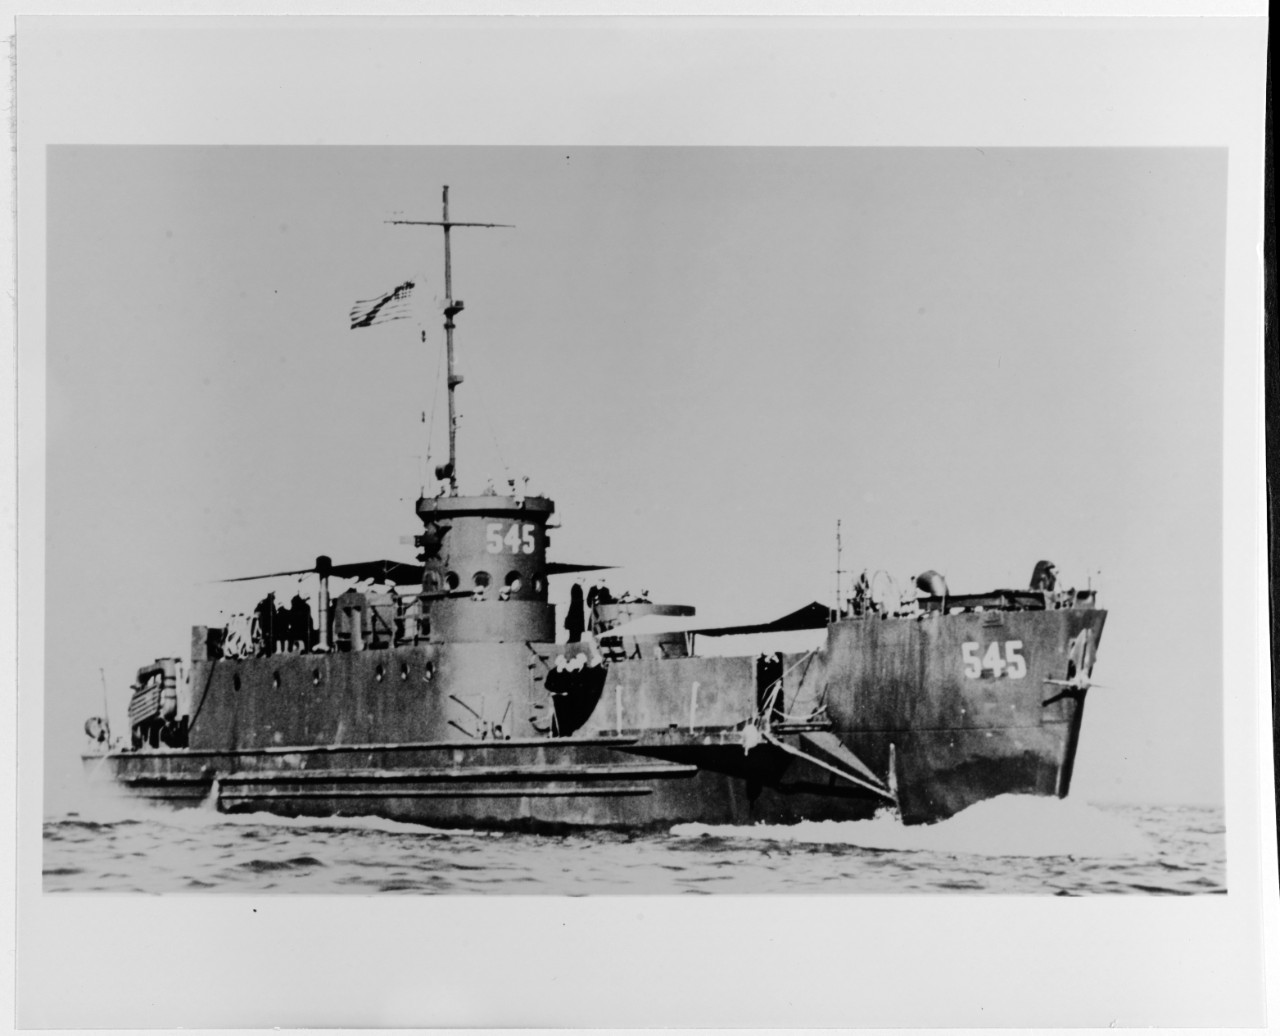 USS LCI-545